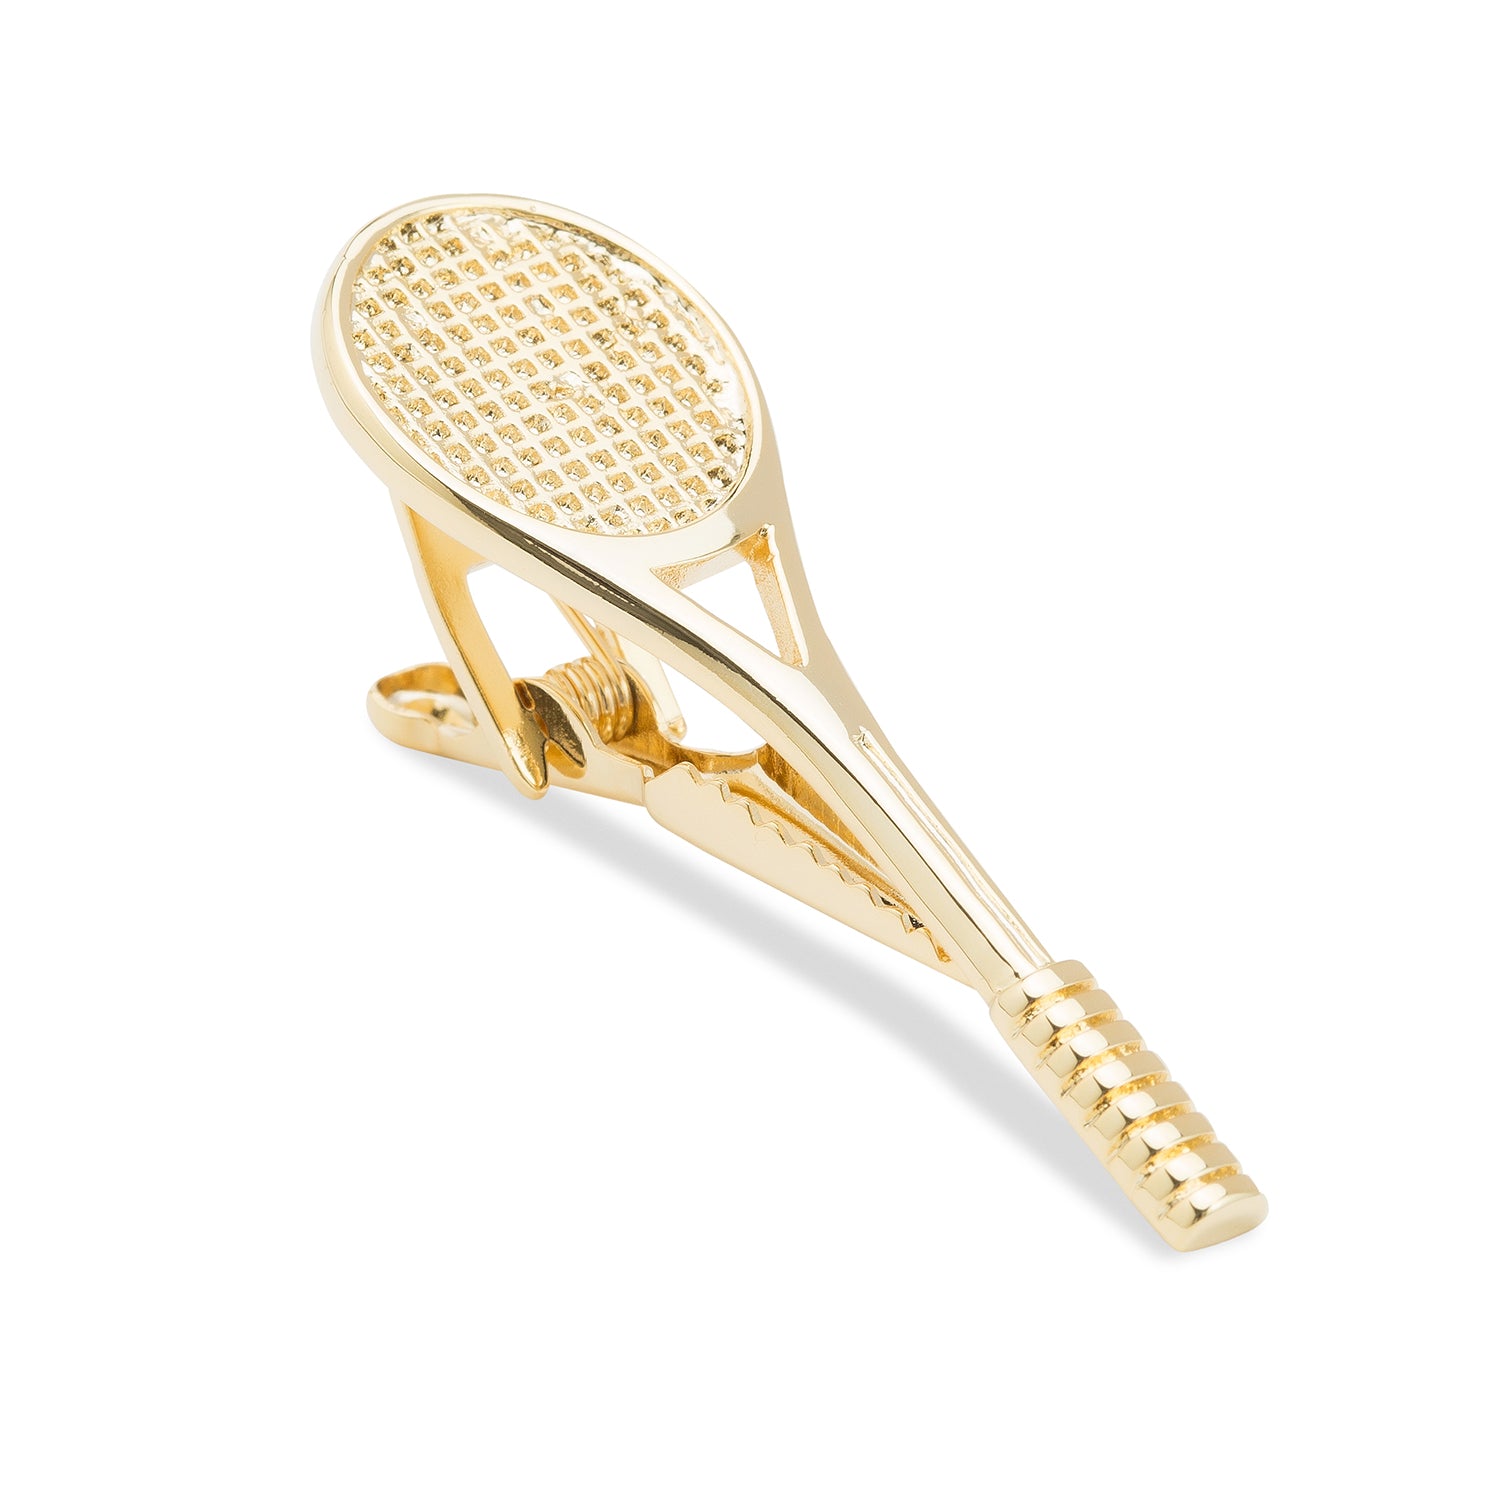 McEnroe Gold Tennis Racquet Tie Bar | Racket Sports Tie Clip Bars | OTAA